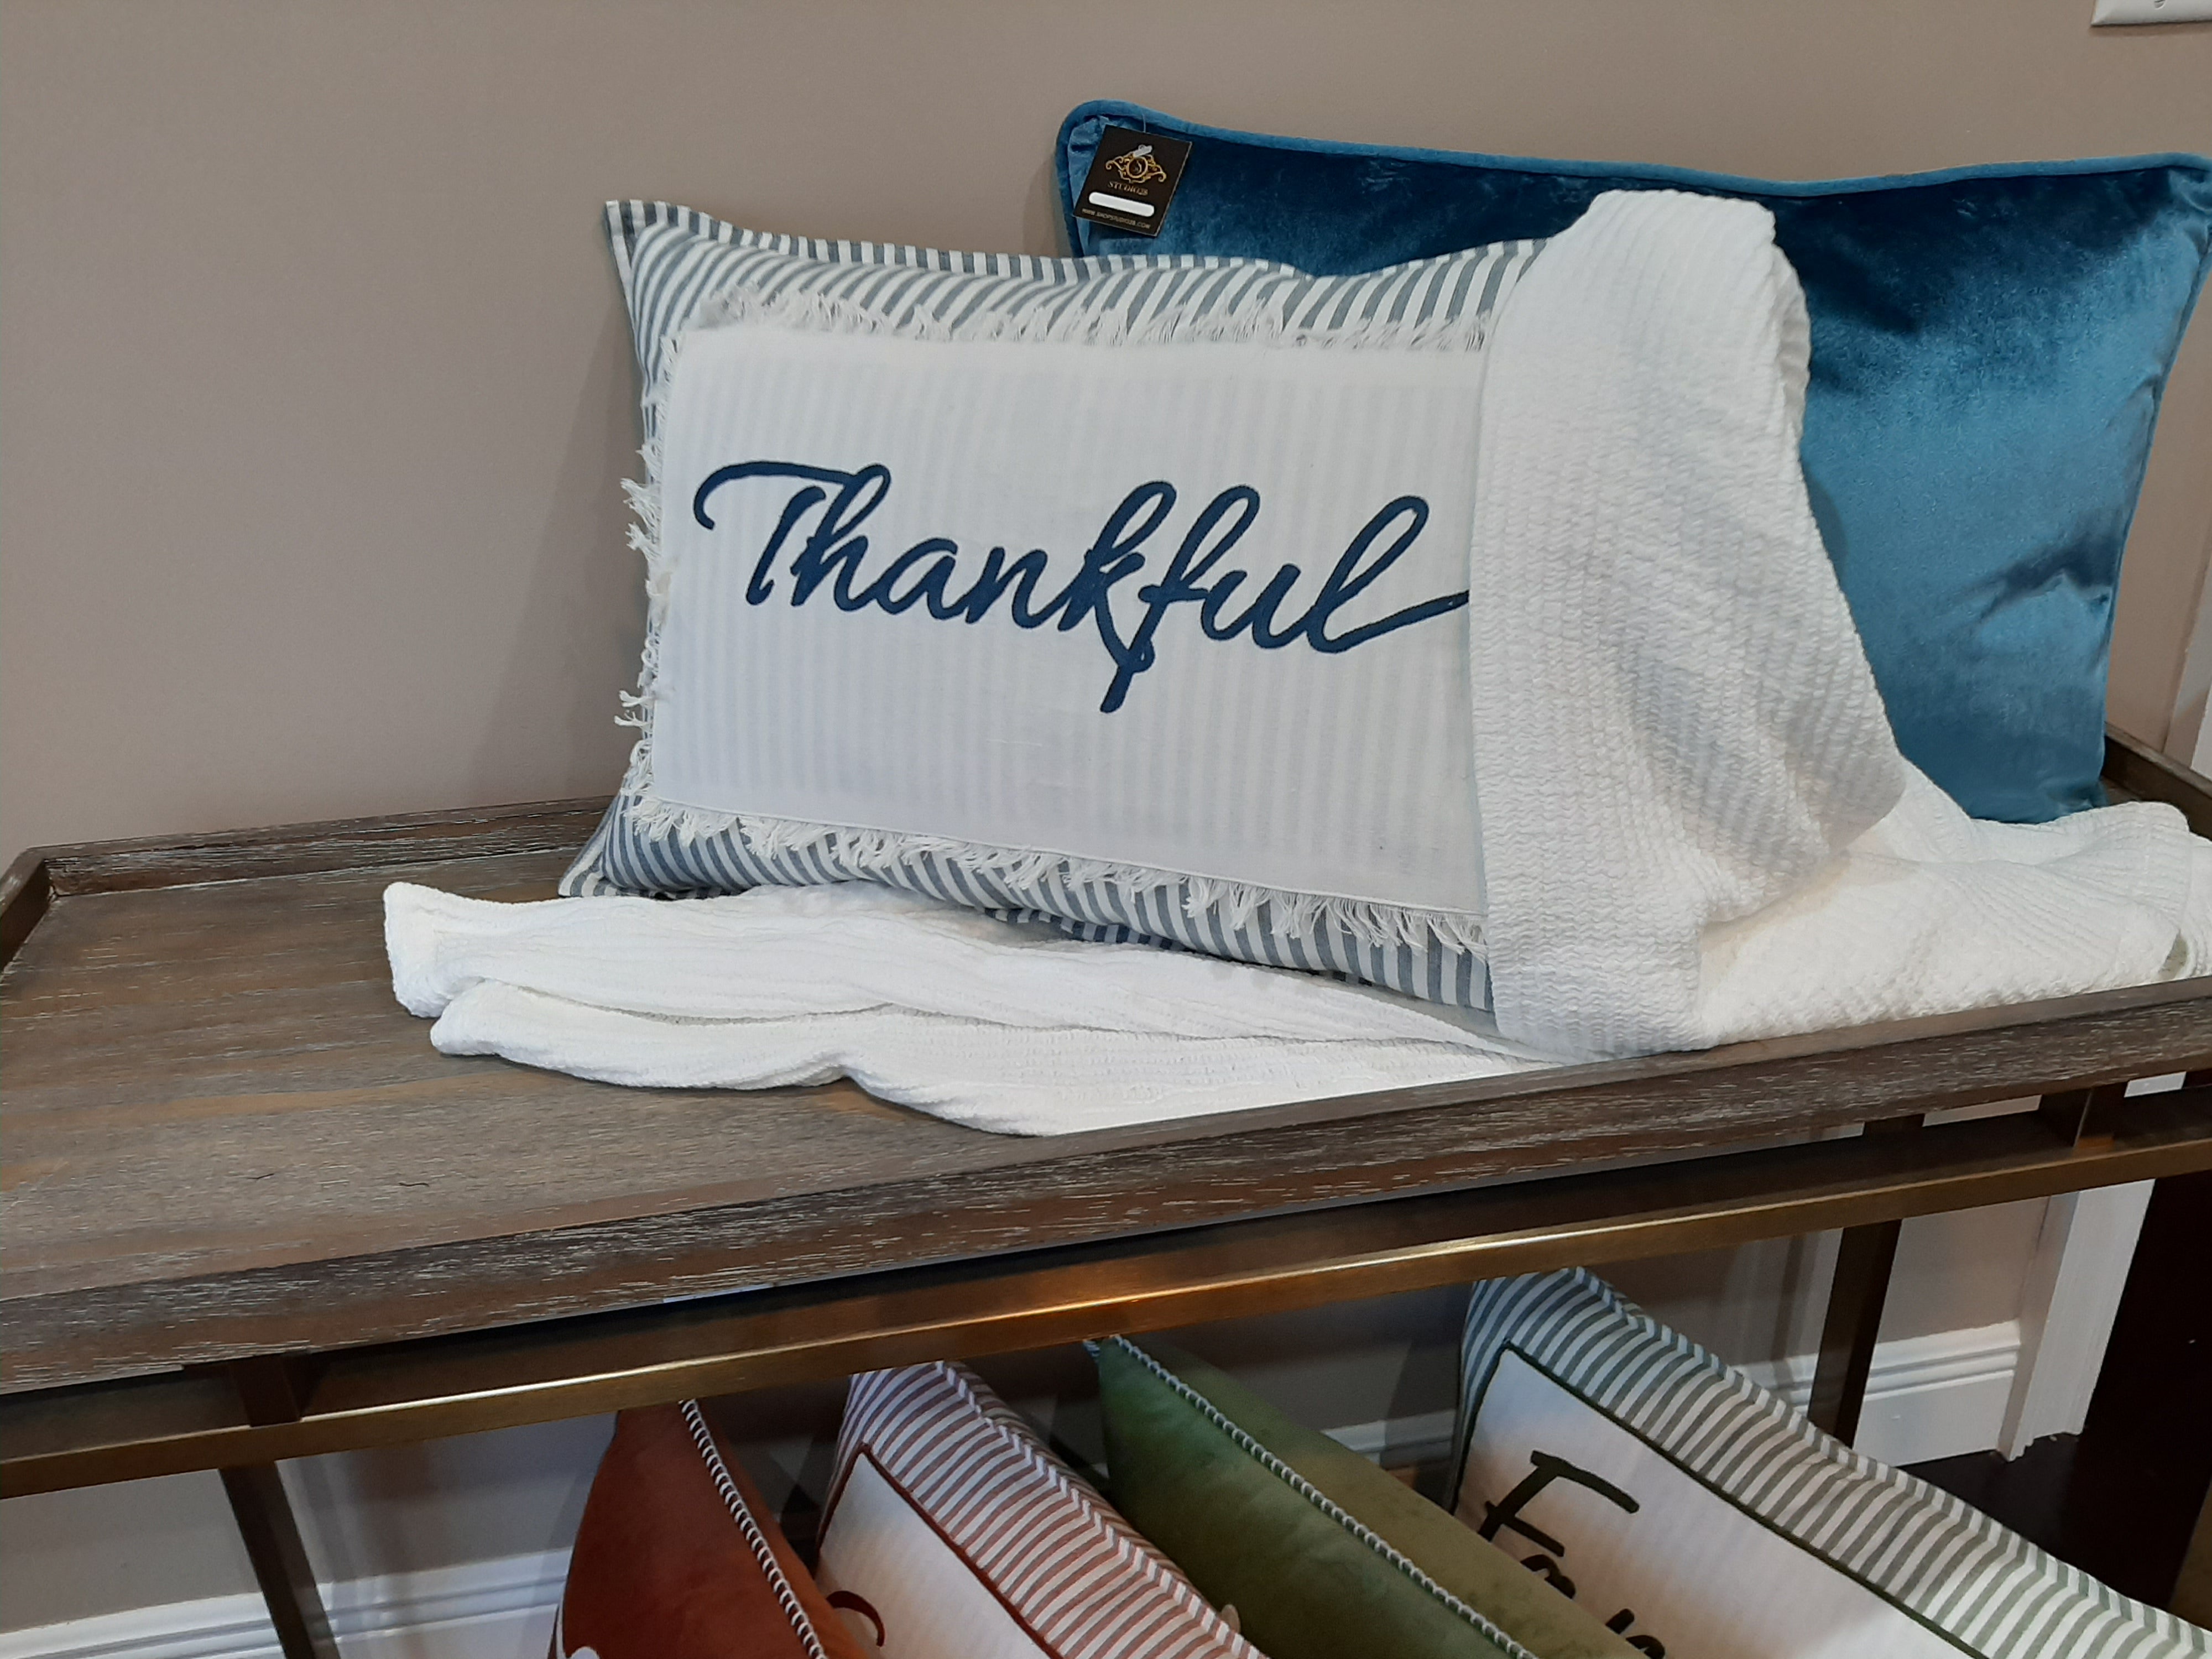 Thankful in Teal Stripe Pillow